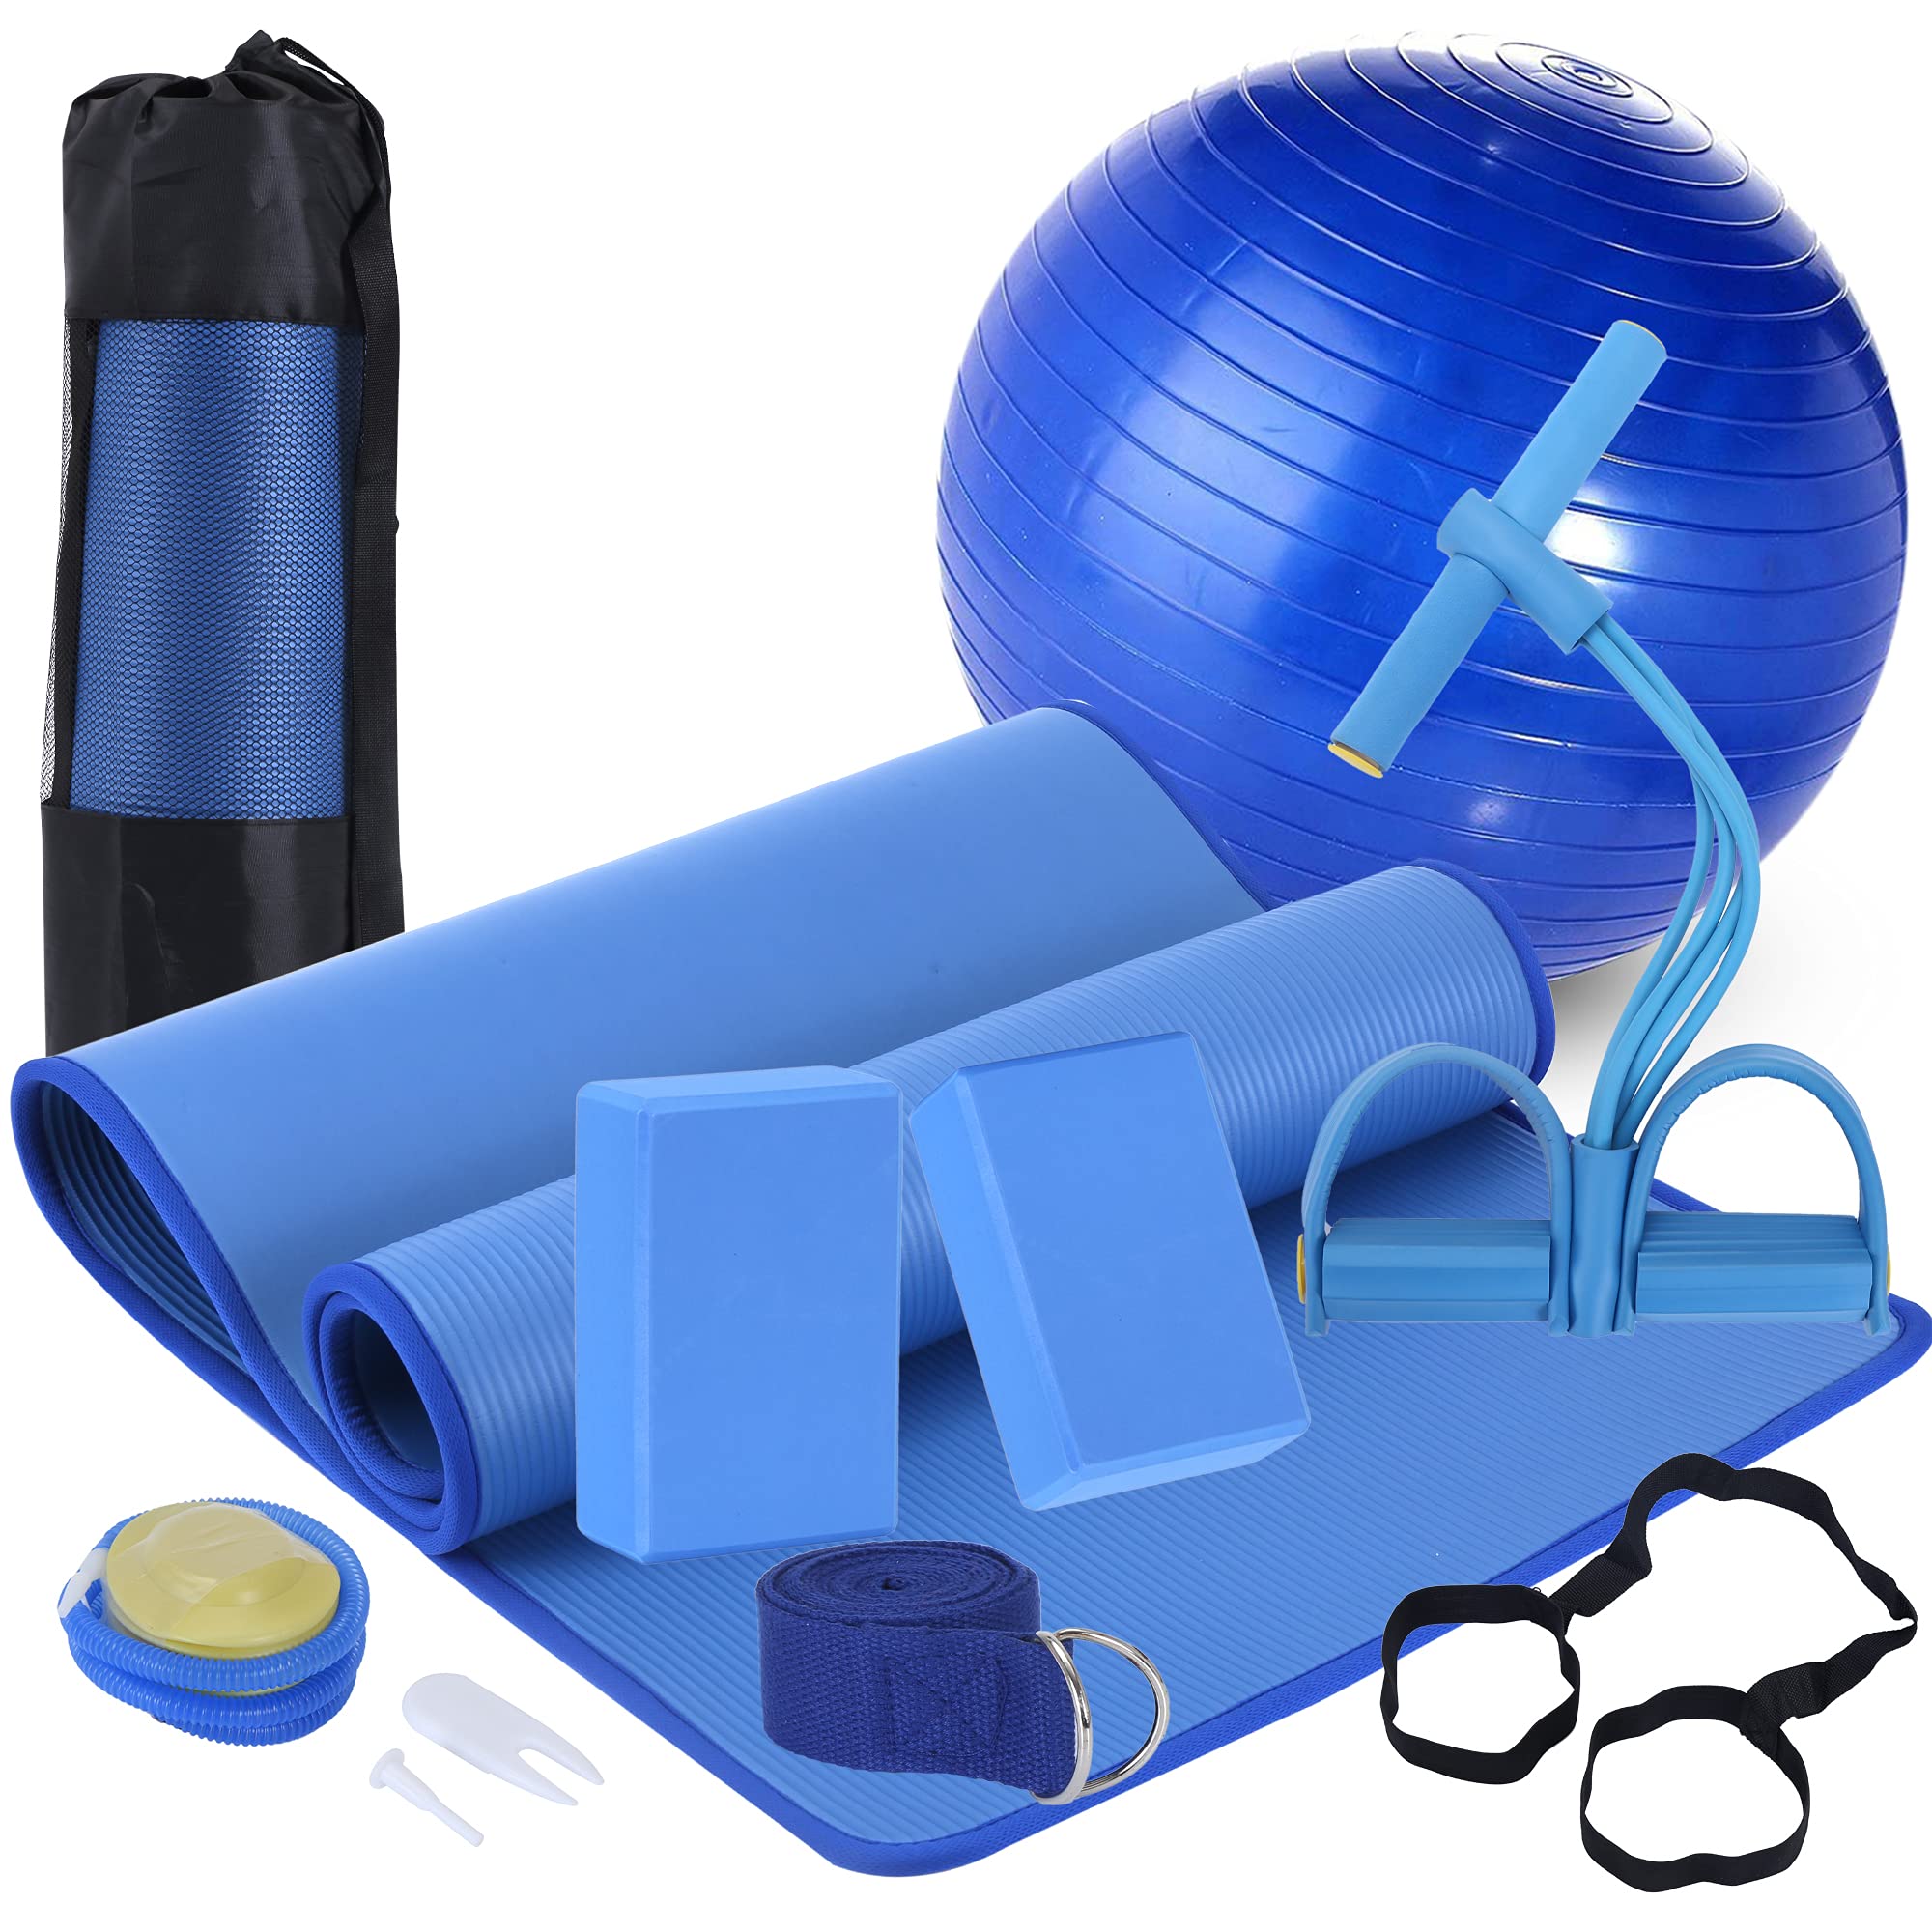  keefee 11 pcs Yoga Starter Sets,Yoga Accessories Kit for  Beginners,Yoga Essentials Equipment Kit Include Fitness Yoga Pilates Ring  Wheel Stretch Belt Yoga Foam Blocks Strap and Socks (Blue) : Sports